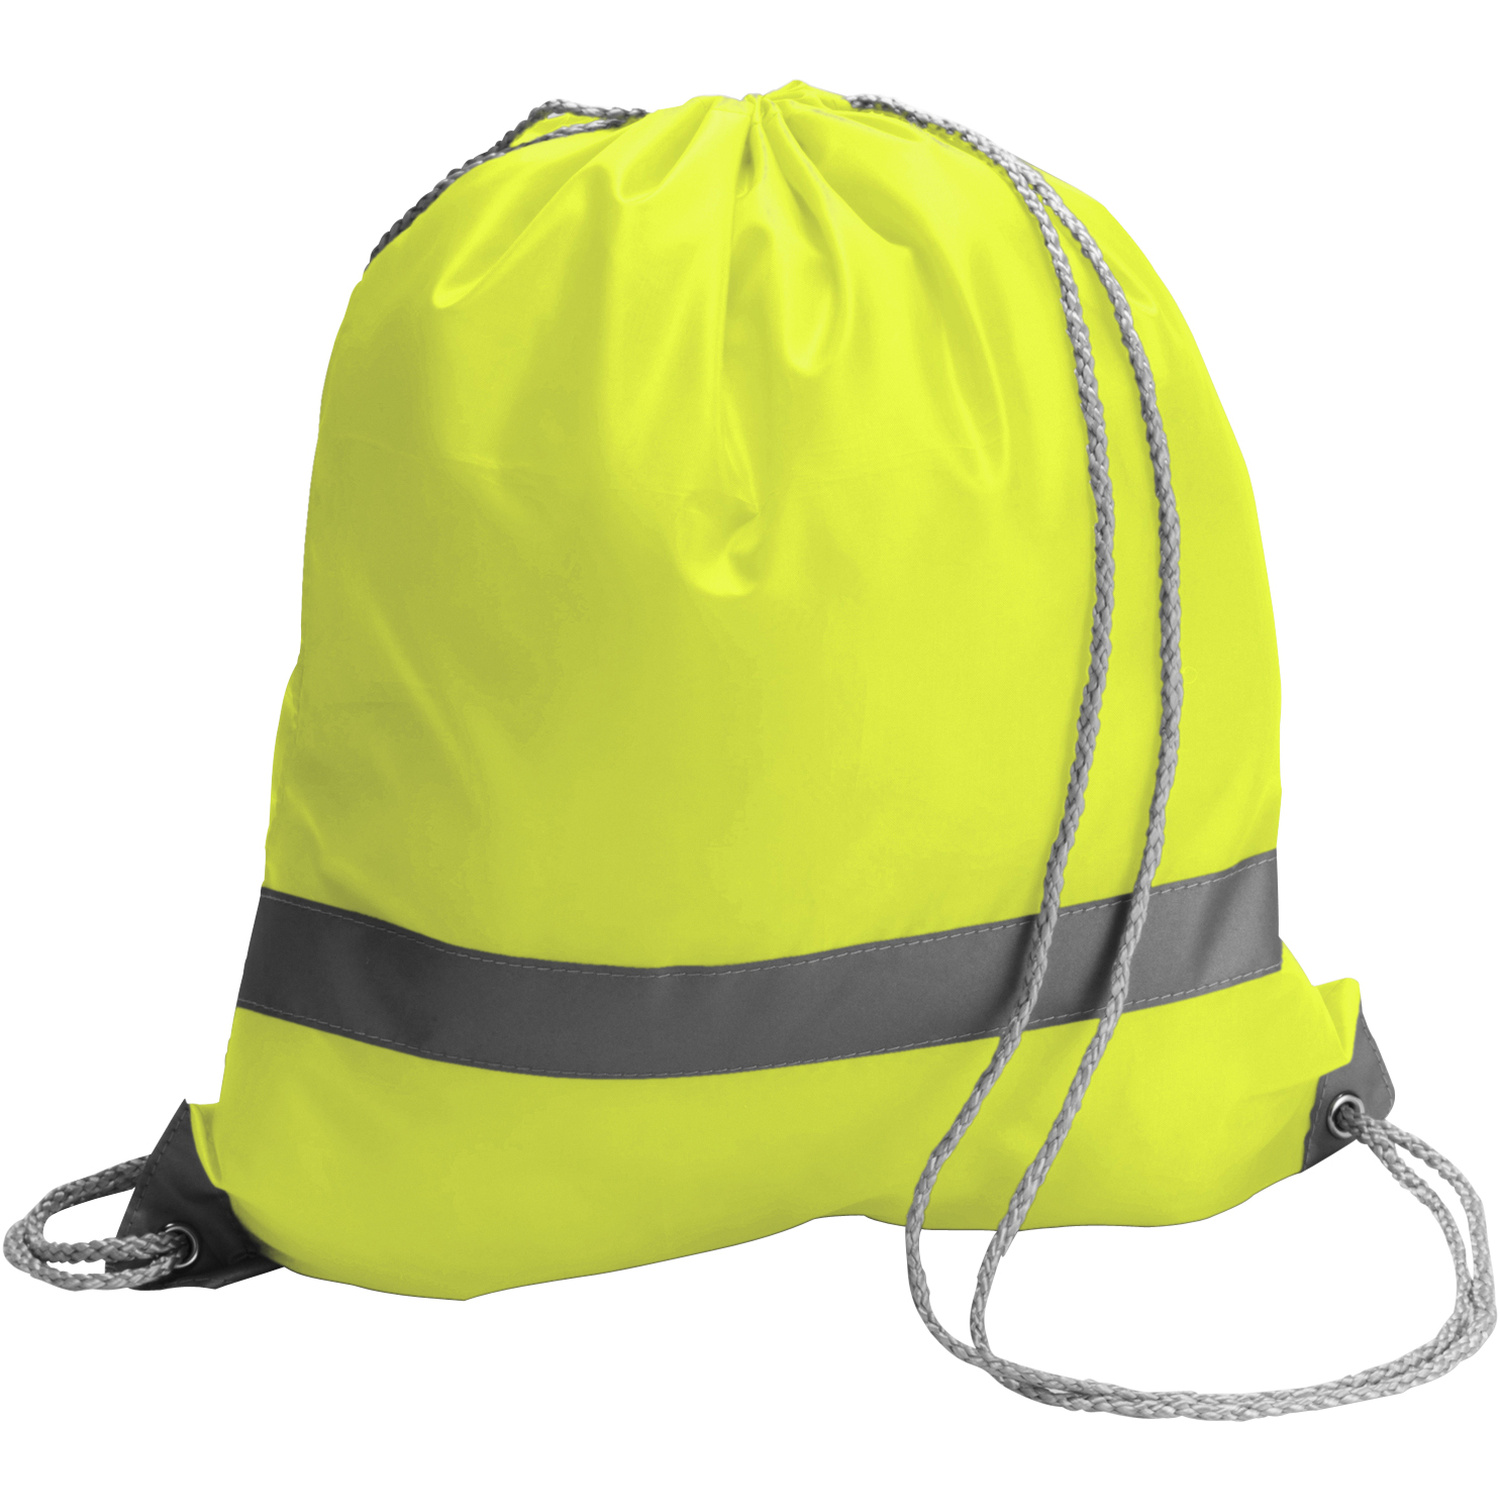 006238 006999999 3d135 frt pro01 fal - Drawstring backpack